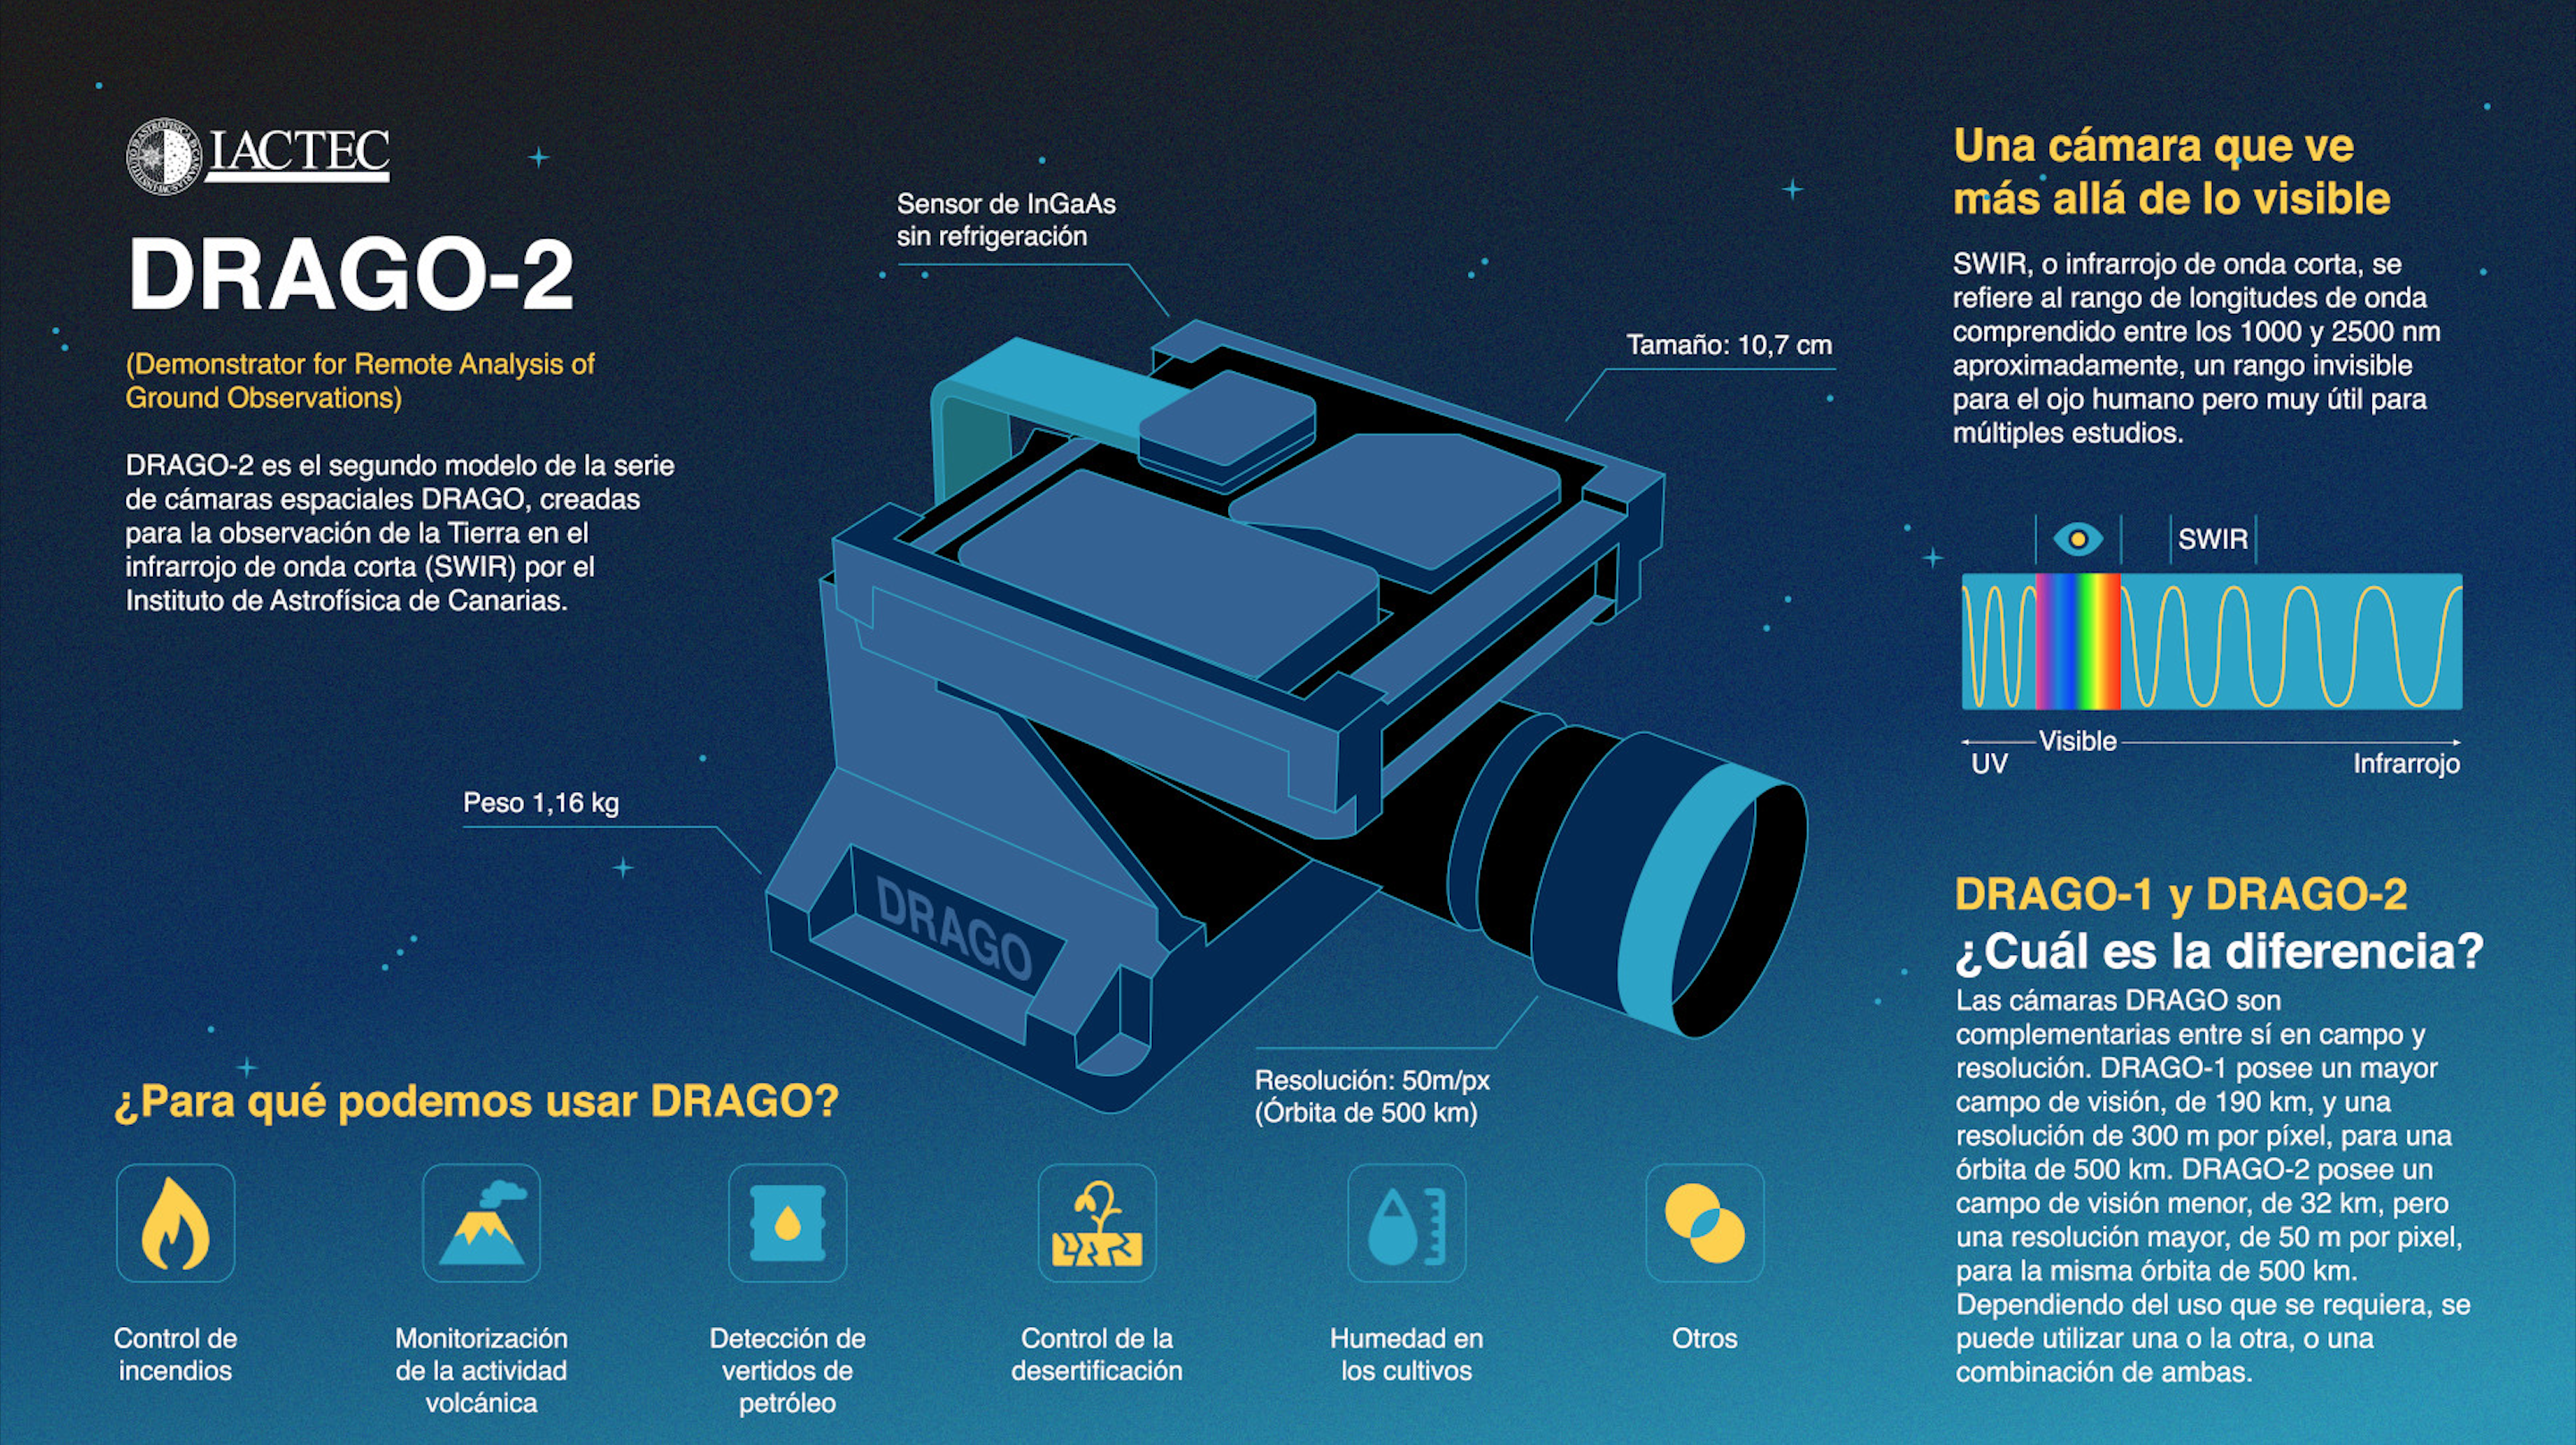 Infographic of DRAGO-2